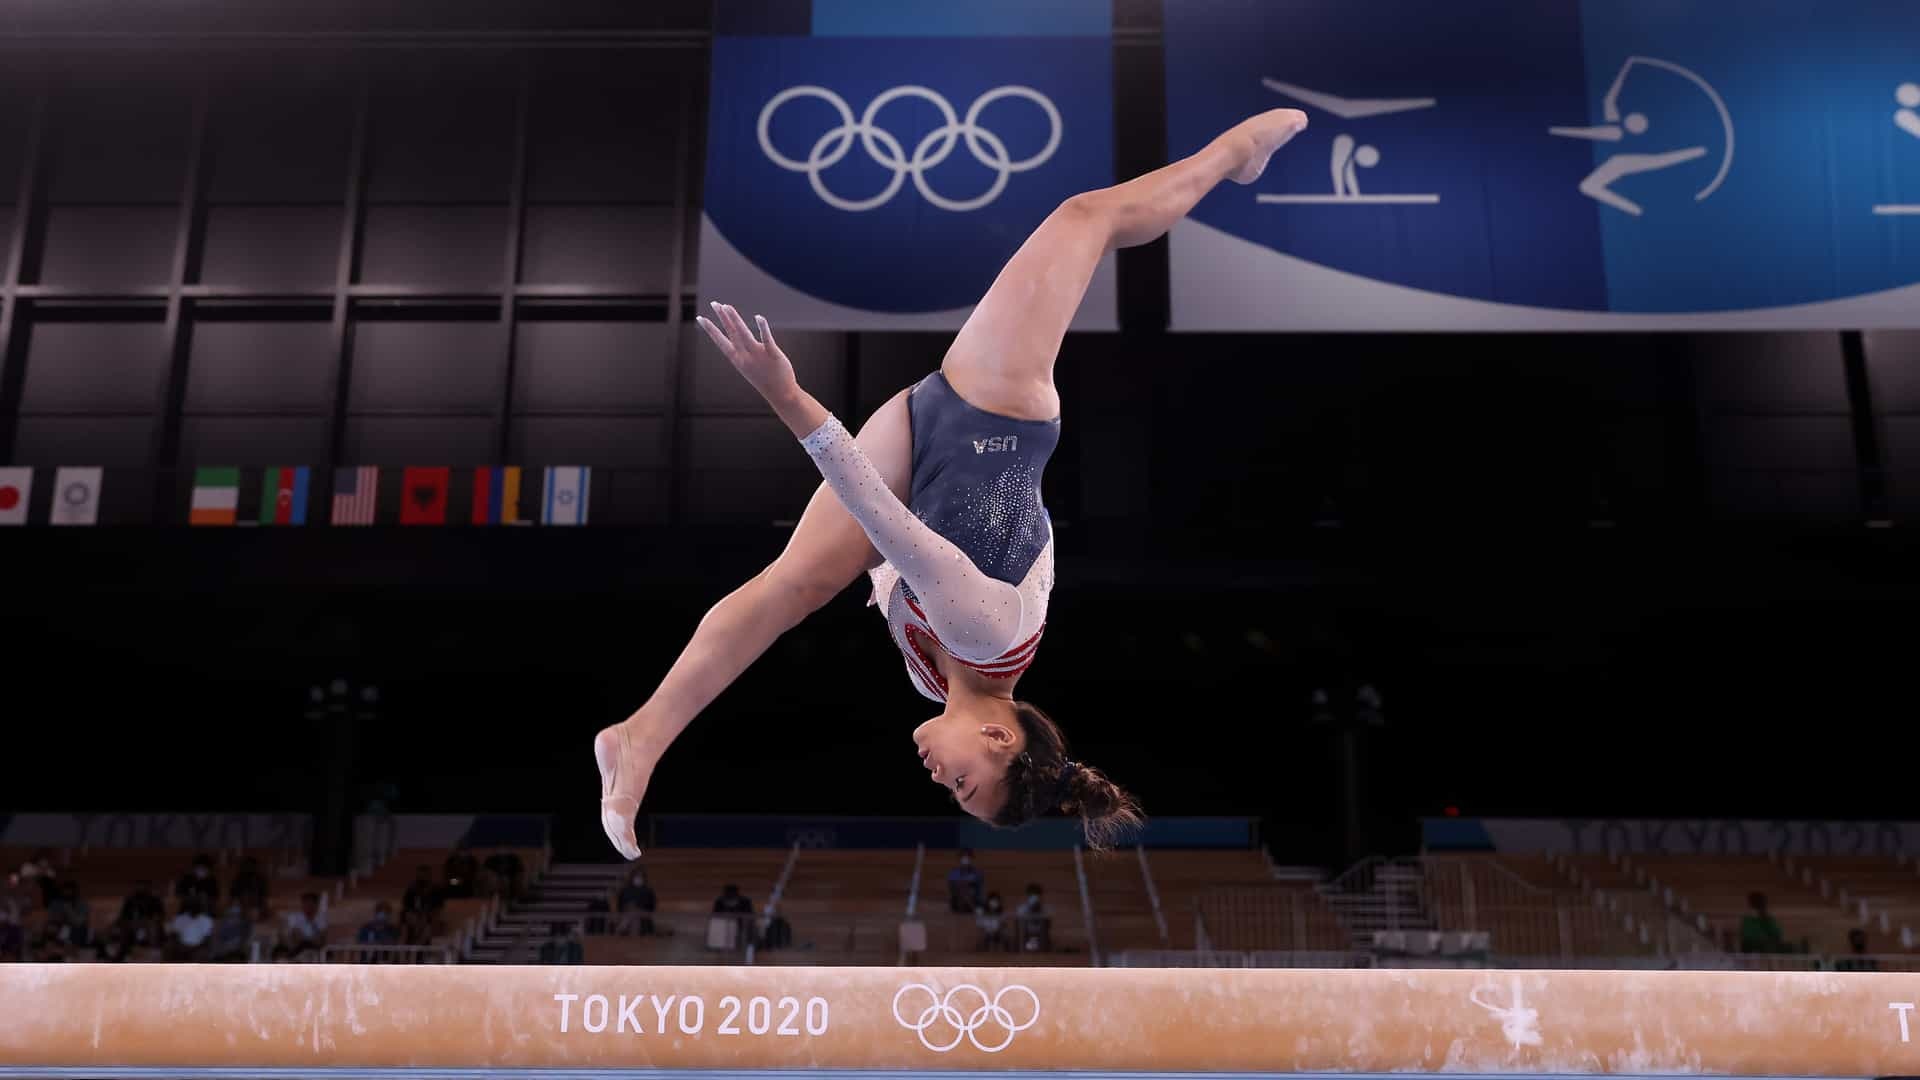 Balance Beam: Suni Lee at the 2020 Tokyo Summer Olympic Games, Artistic Gymnastics event. 1920x1080 Full HD Wallpaper.